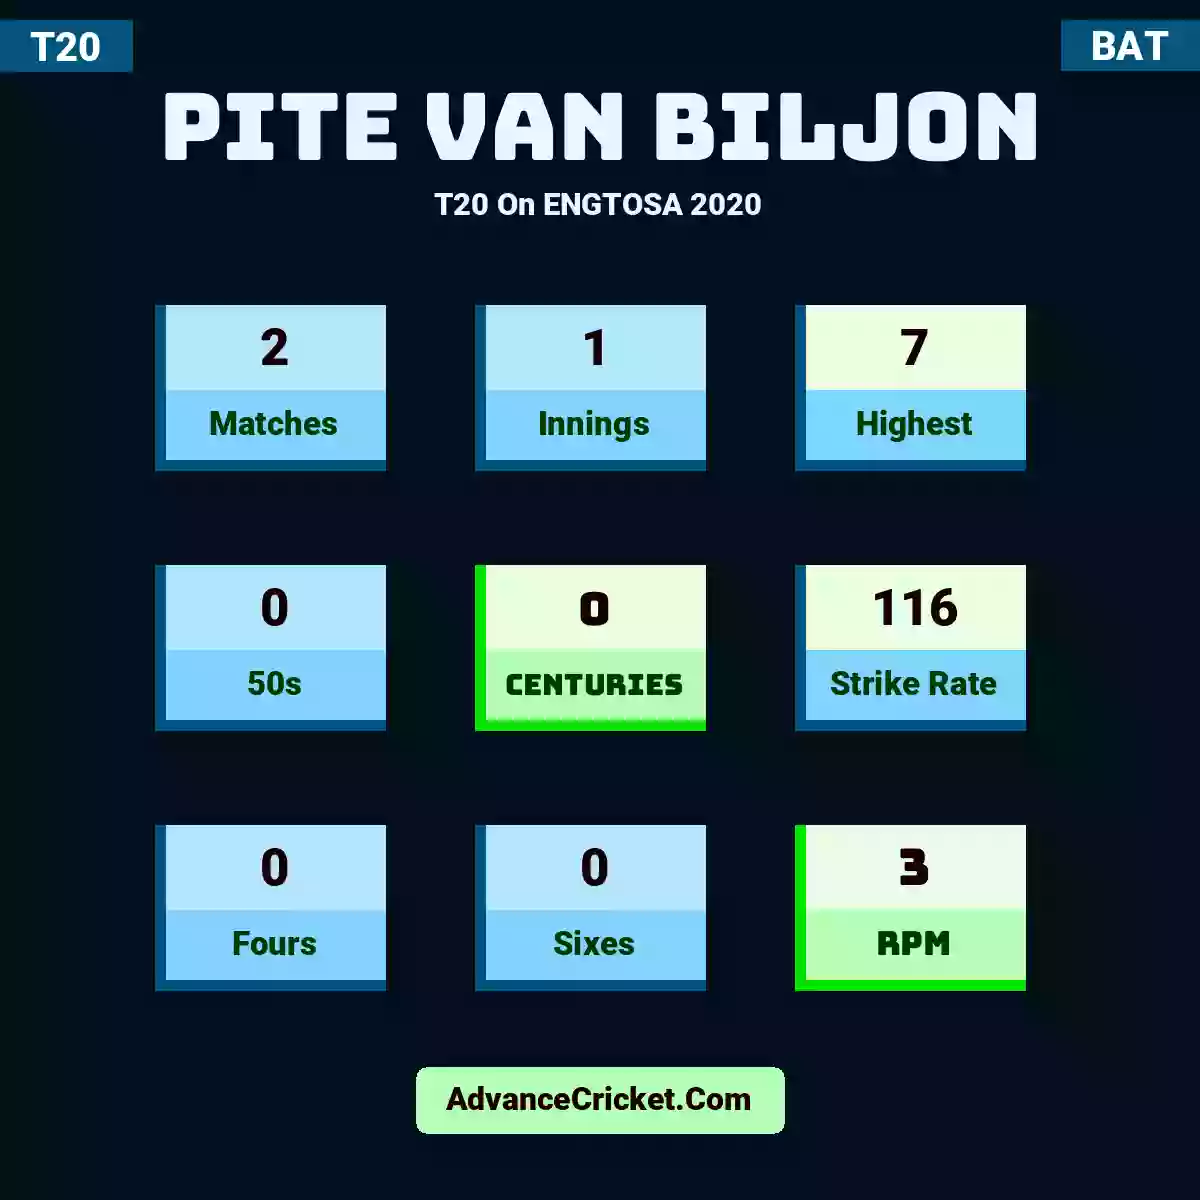 Pite van Biljon T20  On ENGTOSA 2020, Pite van Biljon played 2 matches, scored 7 runs as highest, 0 half-centuries, and 0 centuries, with a strike rate of 116. P.van Biljon hit 0 fours and 0 sixes, with an RPM of 3.